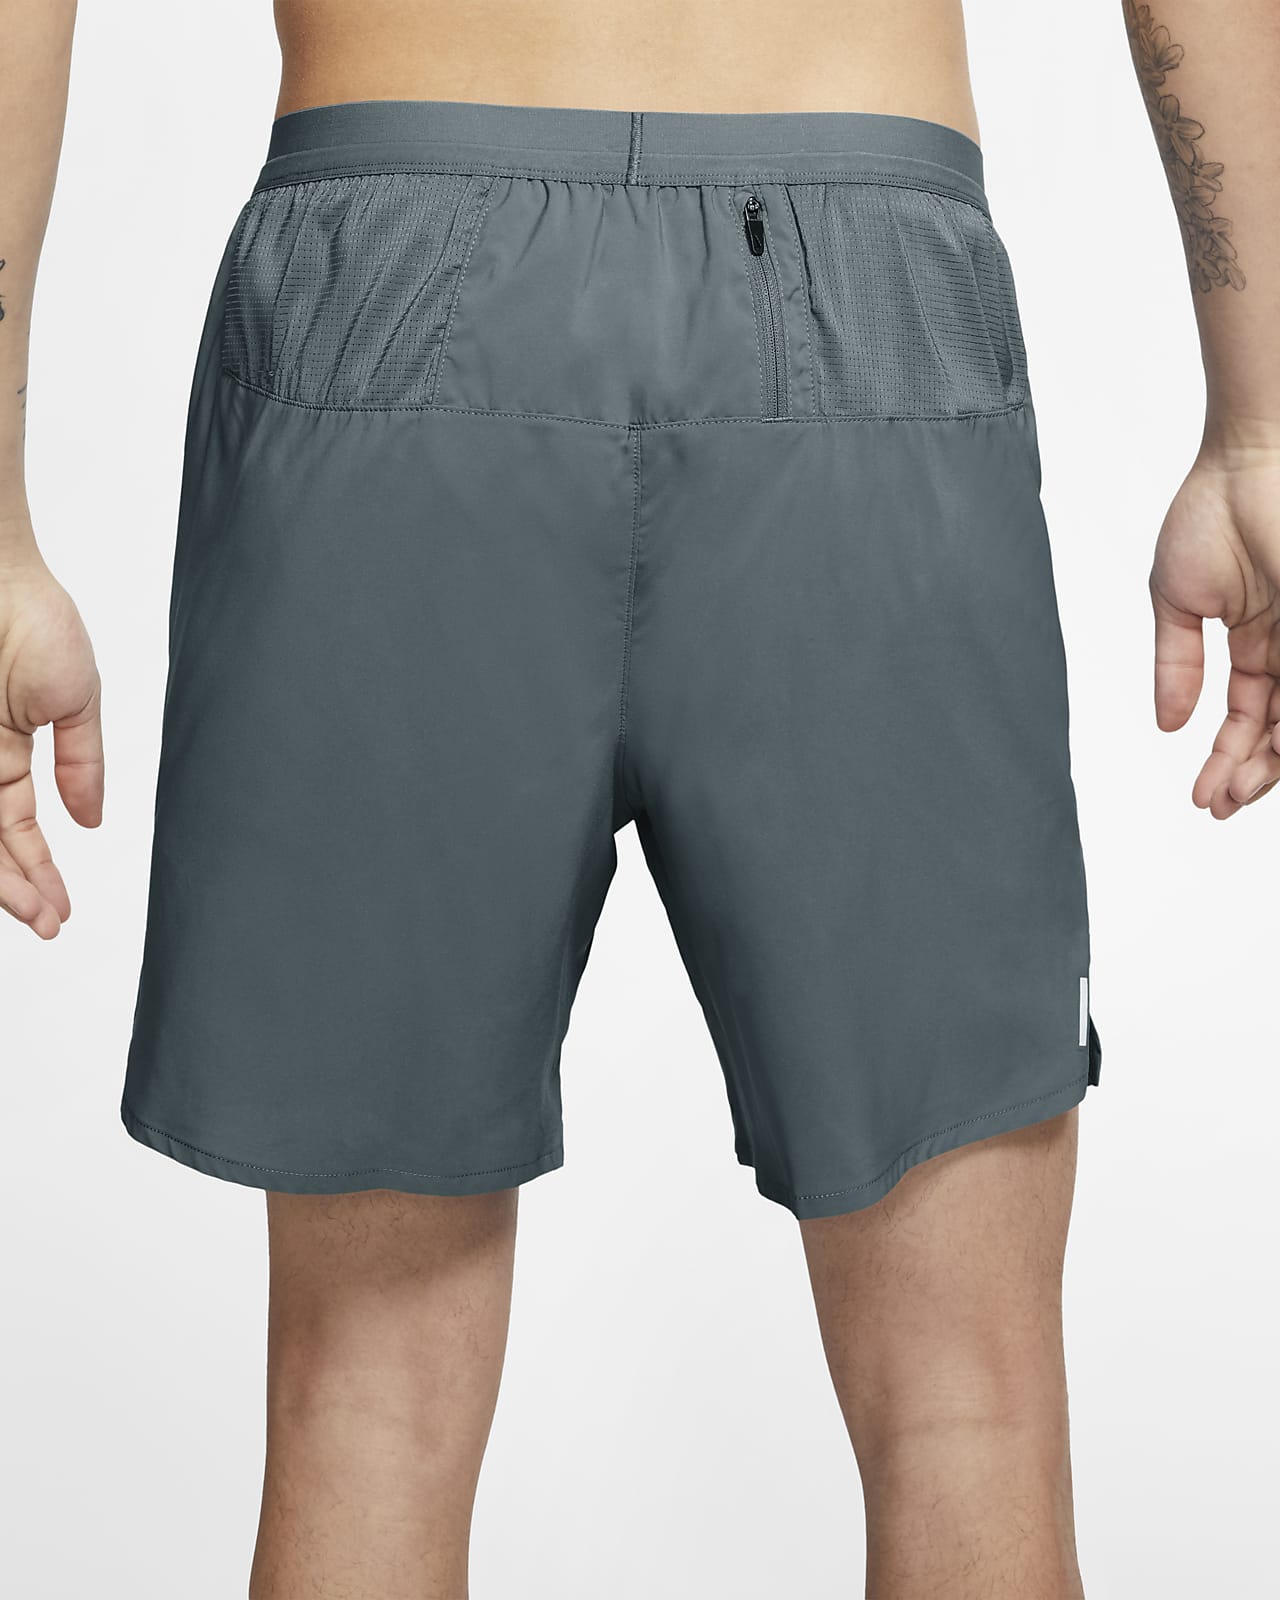 nike shorts reflective